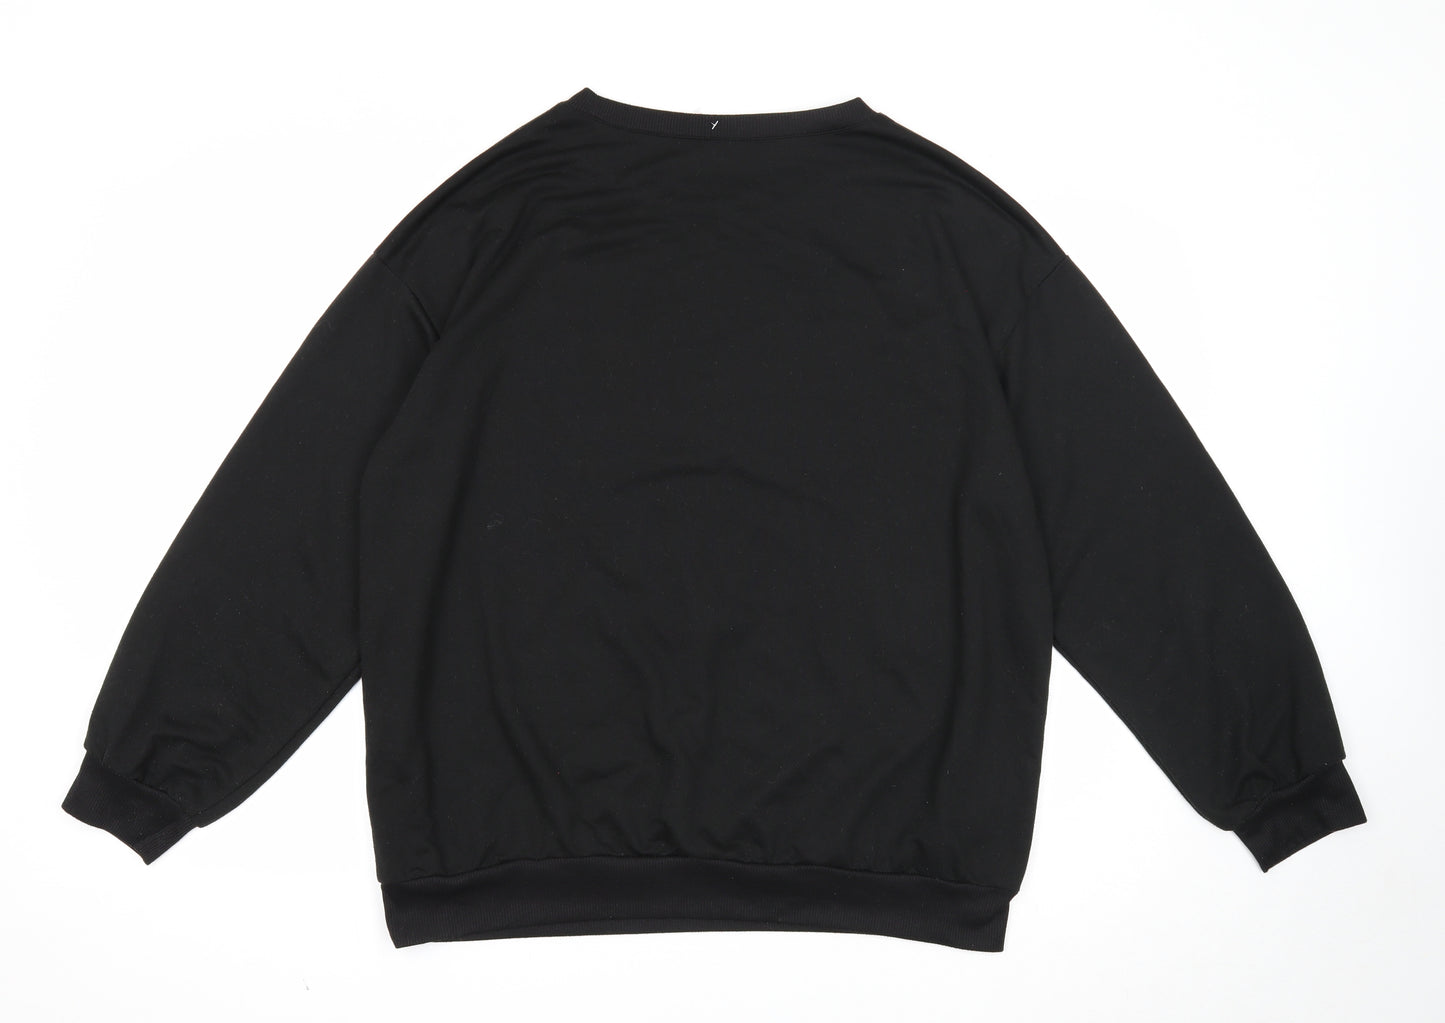 SheIn Mens Black Cotton Pullover Sweatshirt Size XL - Pretty Boys